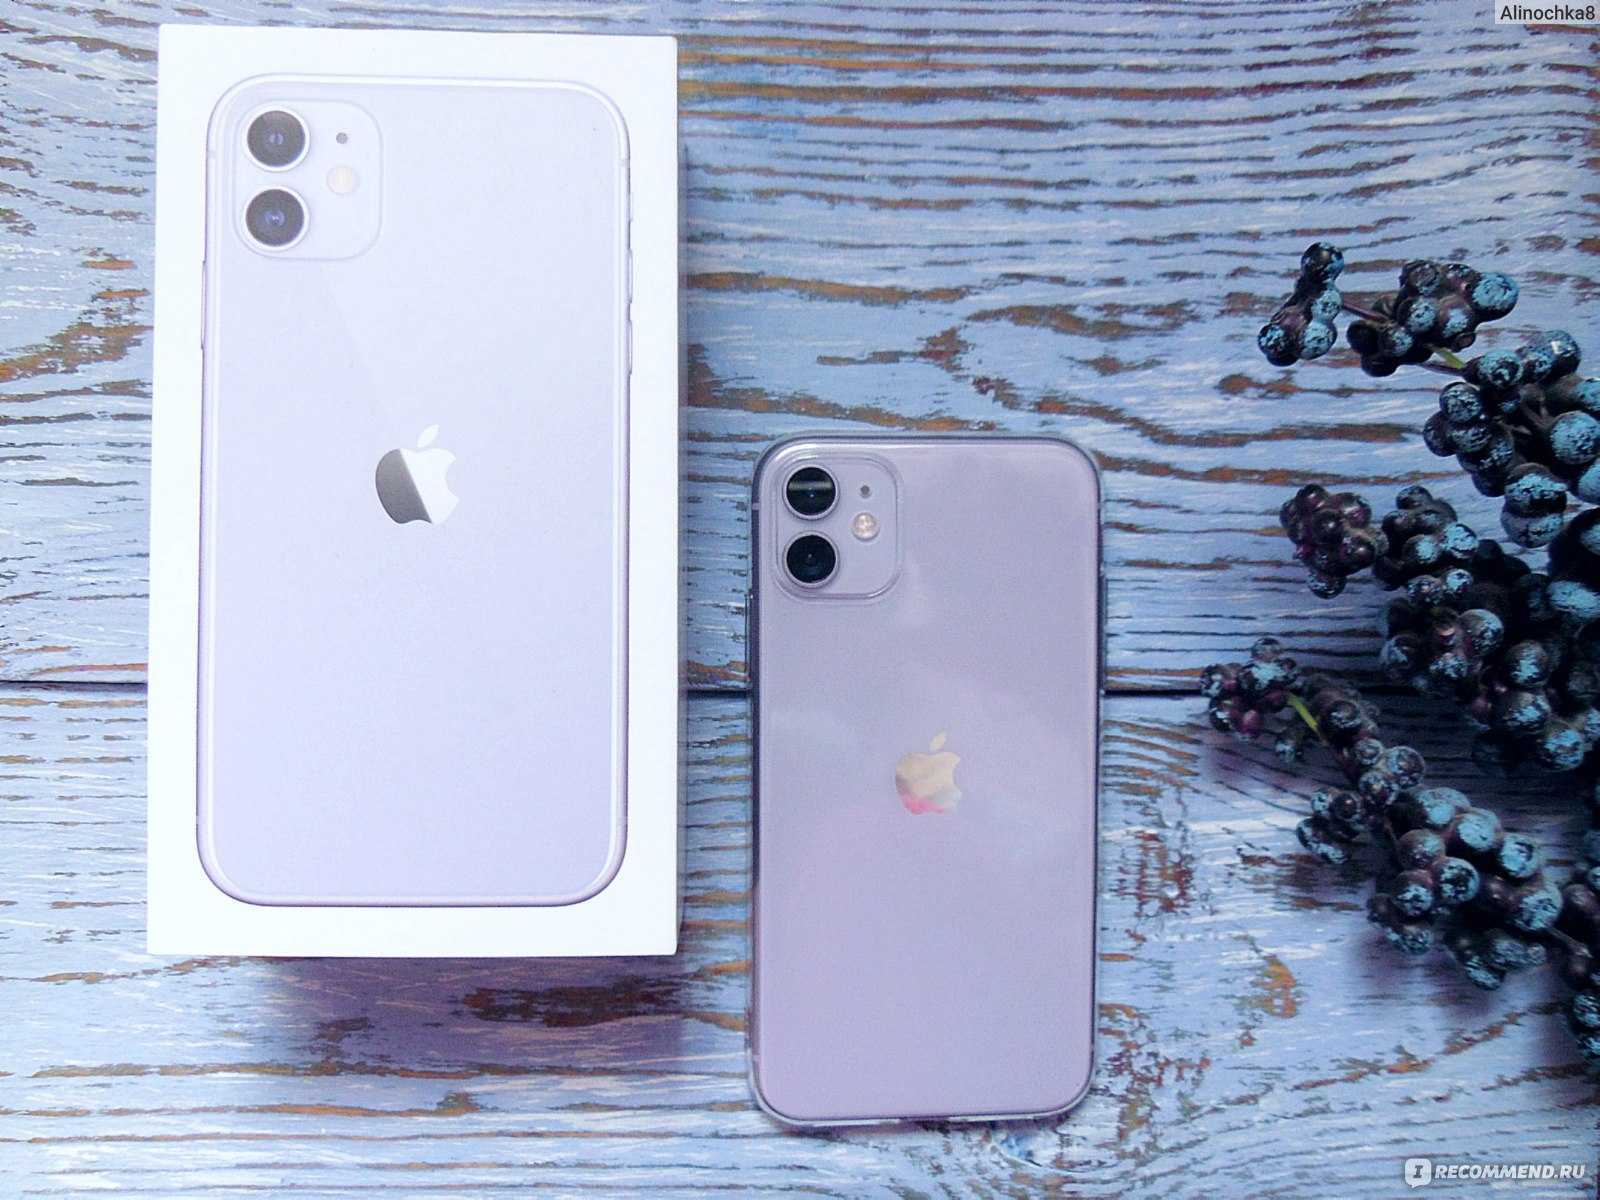 Apple iphone xr vs apple iphone xs